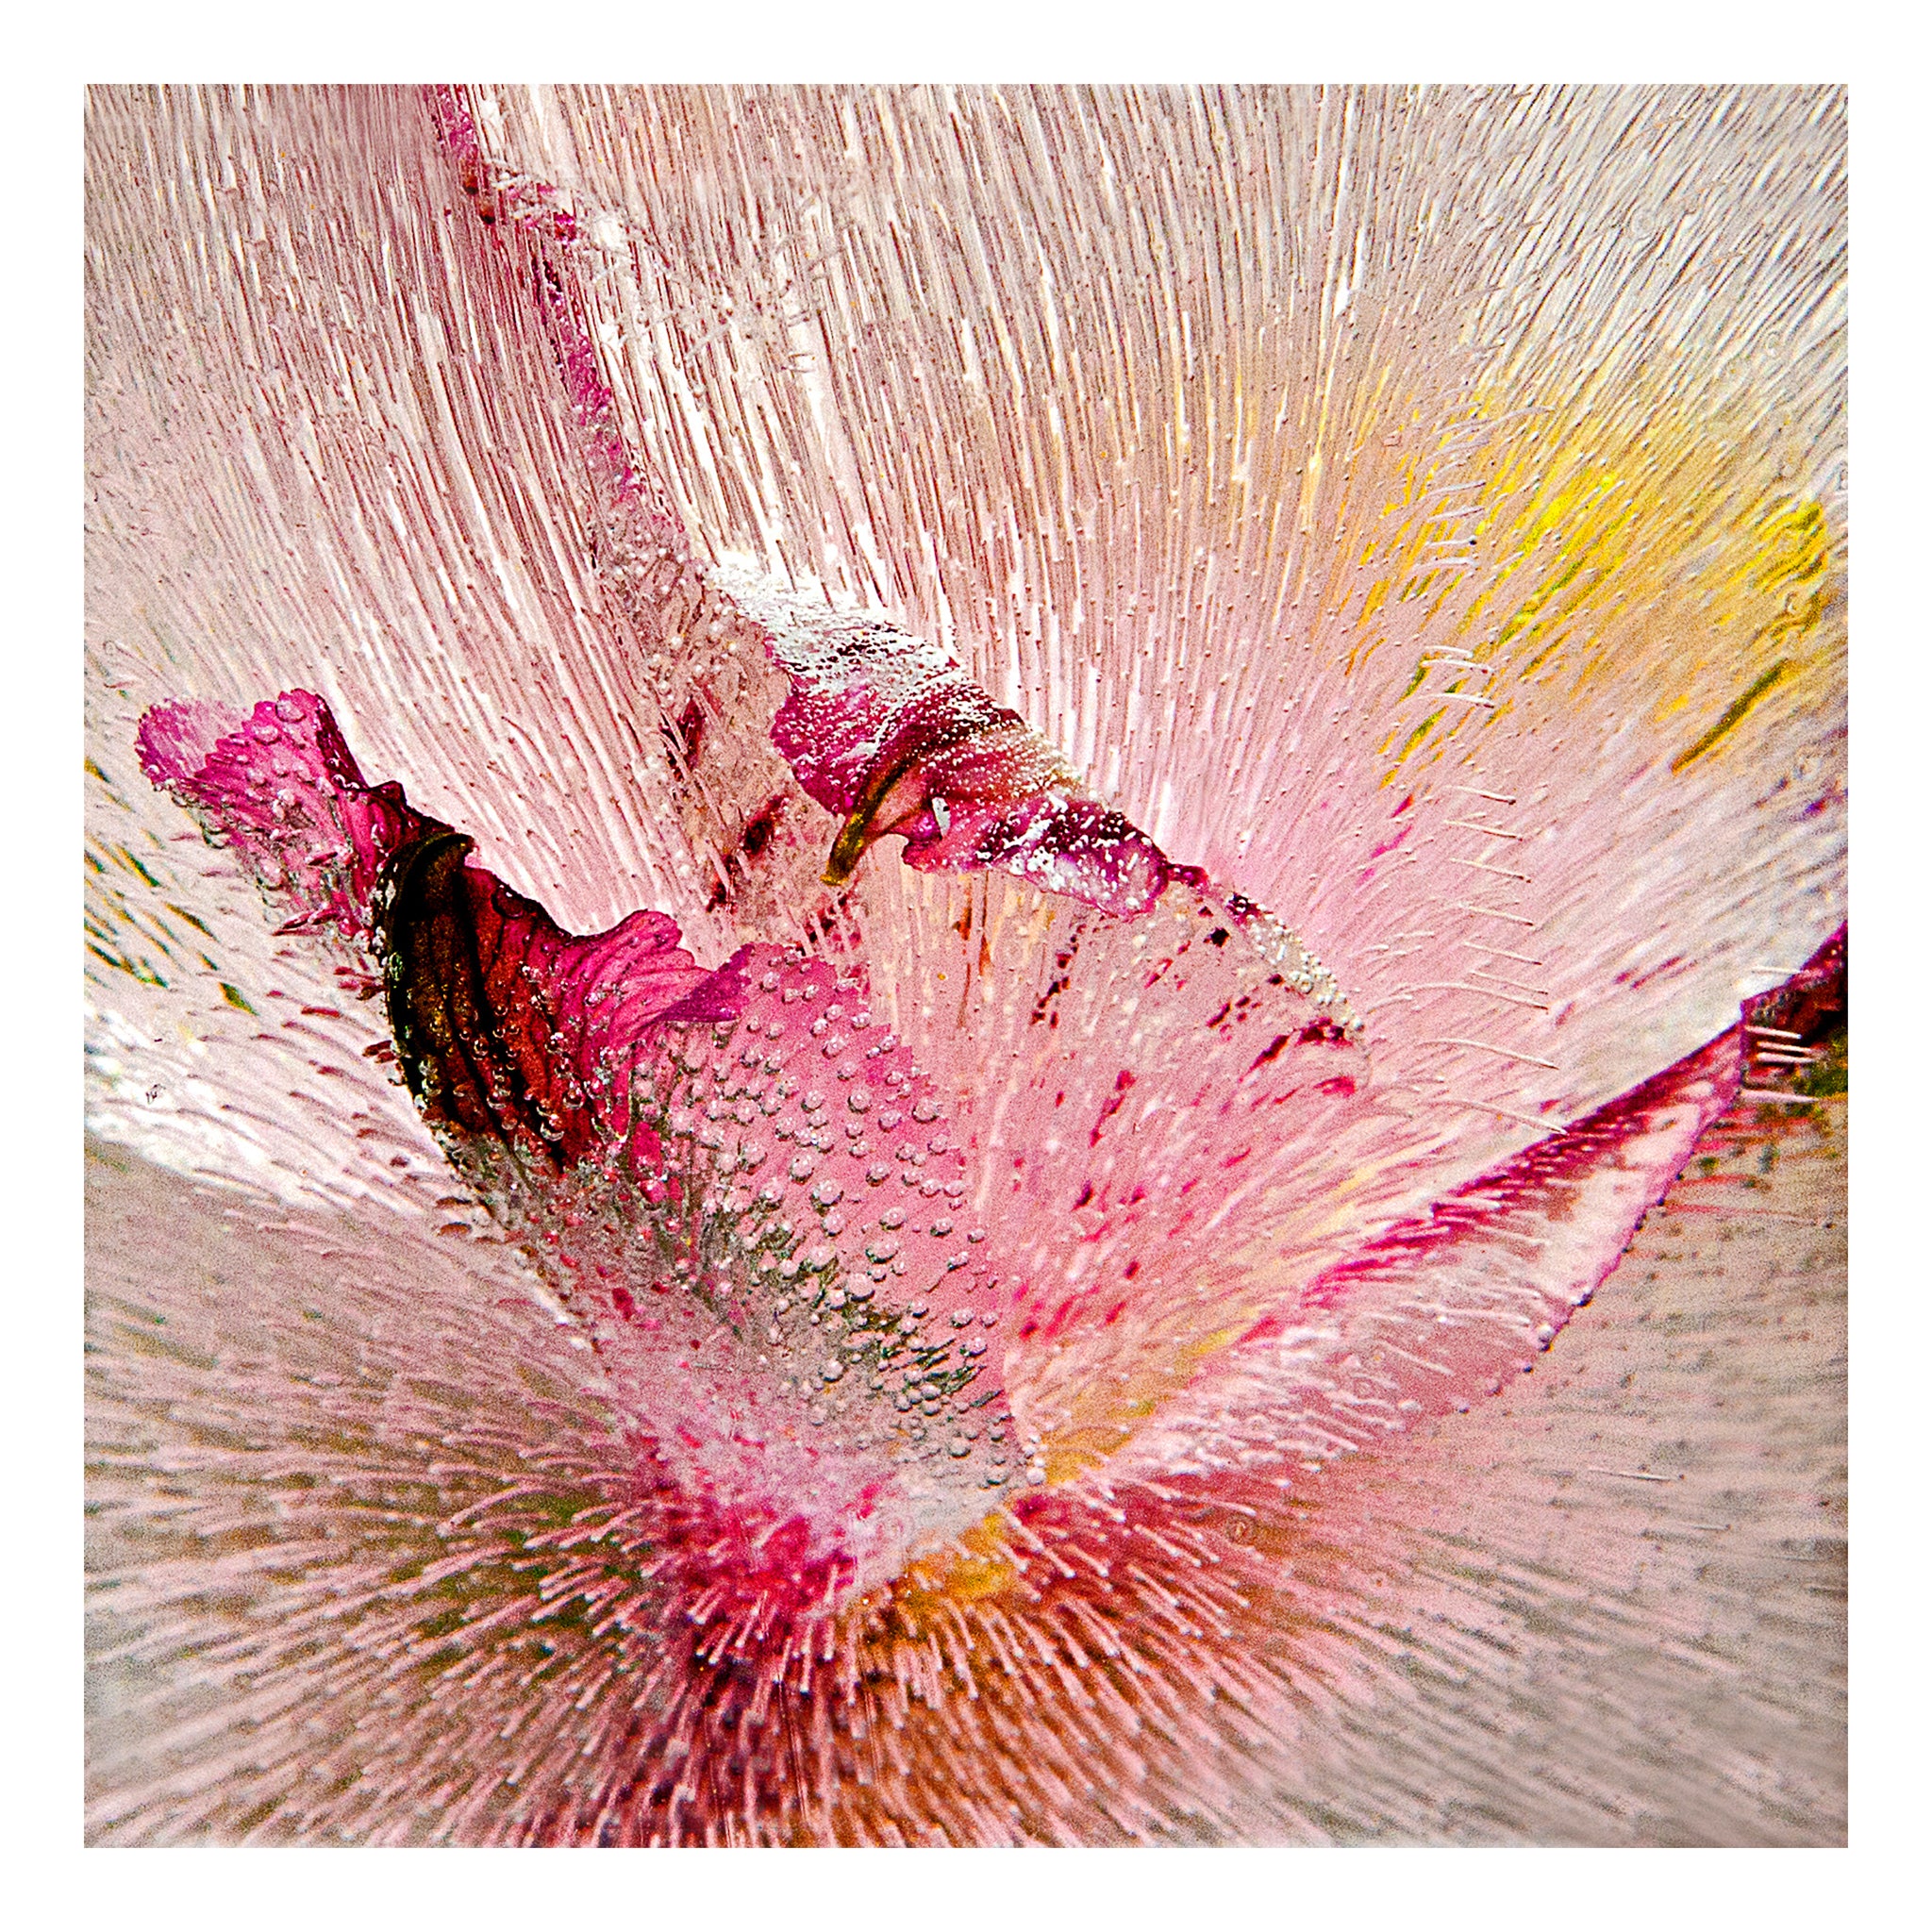 Mynd's i 'Cryogenic Bloom' - Frozen Flowers Photograph – Ginny Fobert